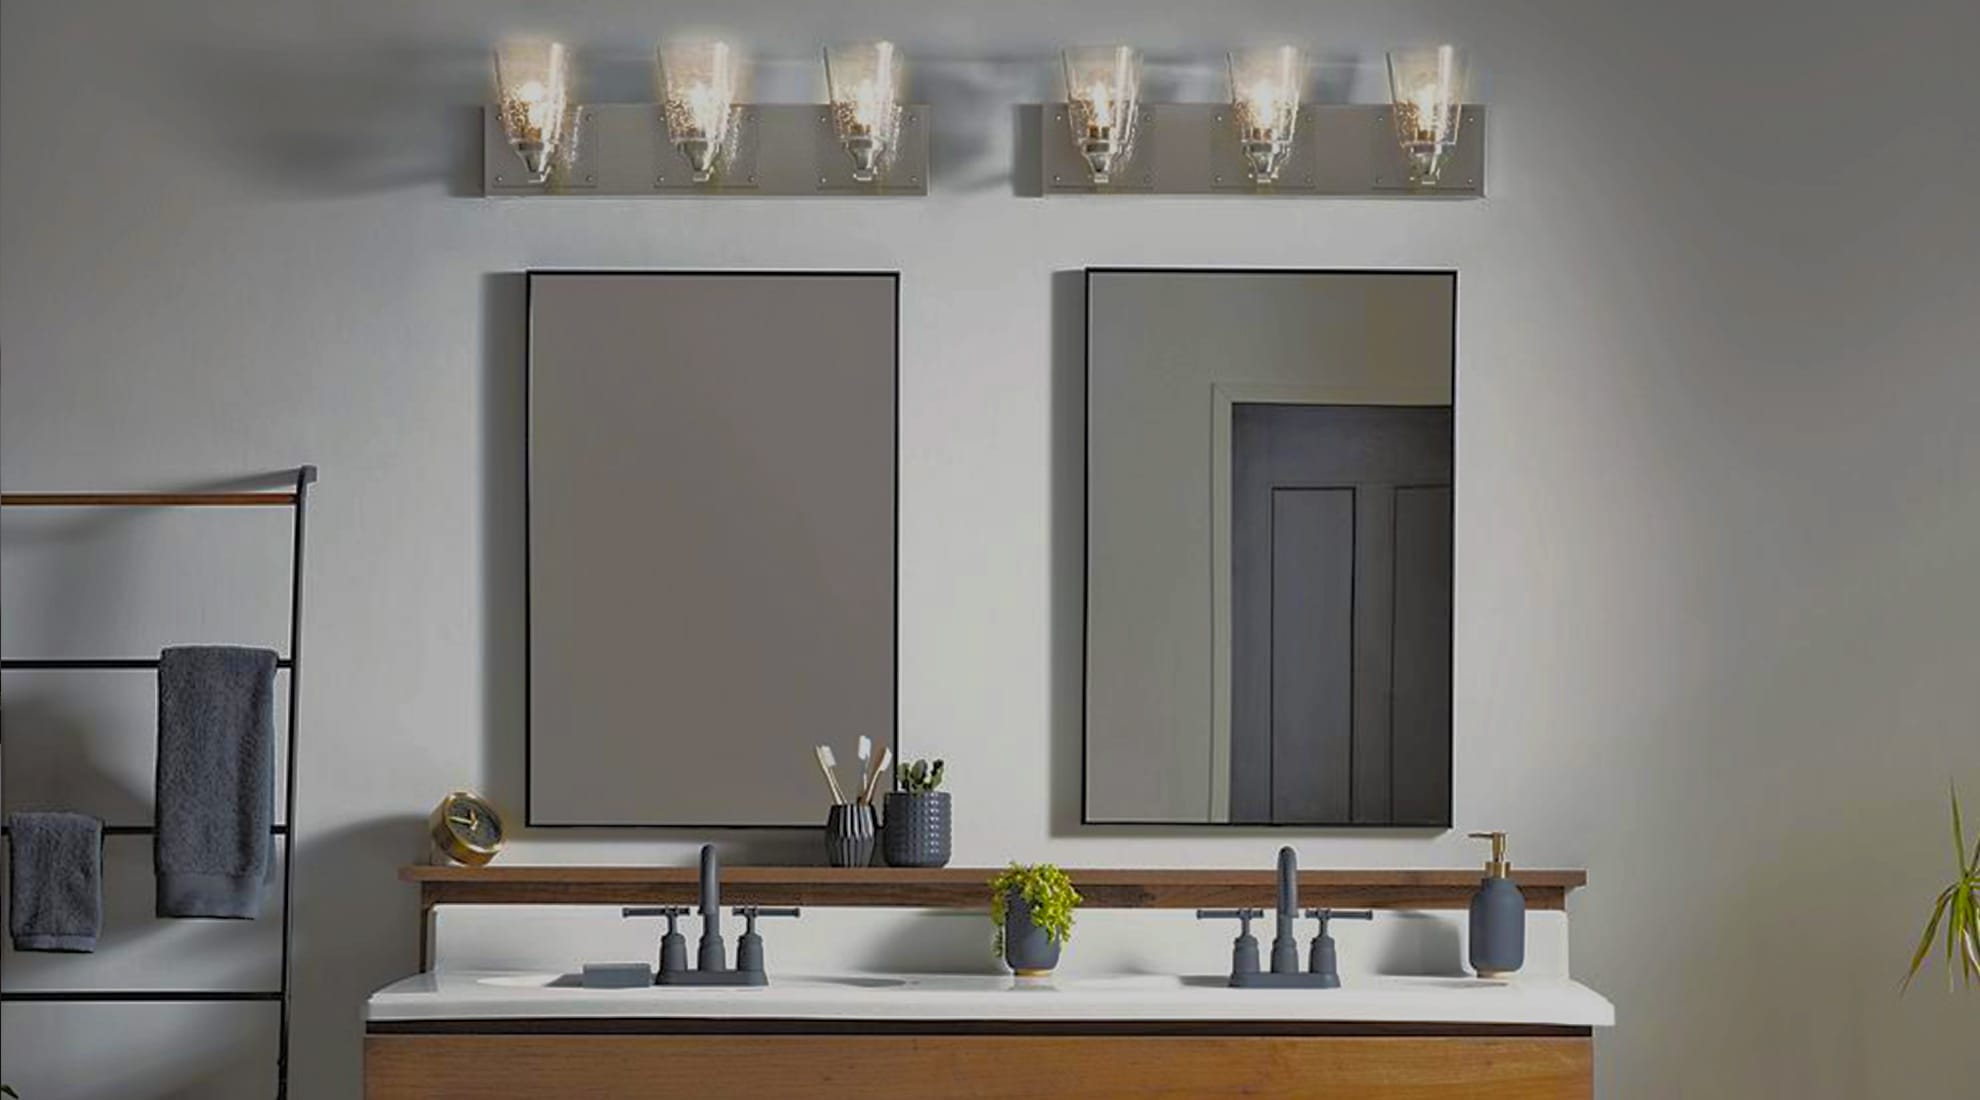 Vanity Lighting Er S Guide How To, Bathroom Vanity Mirror And Lighting Ideas